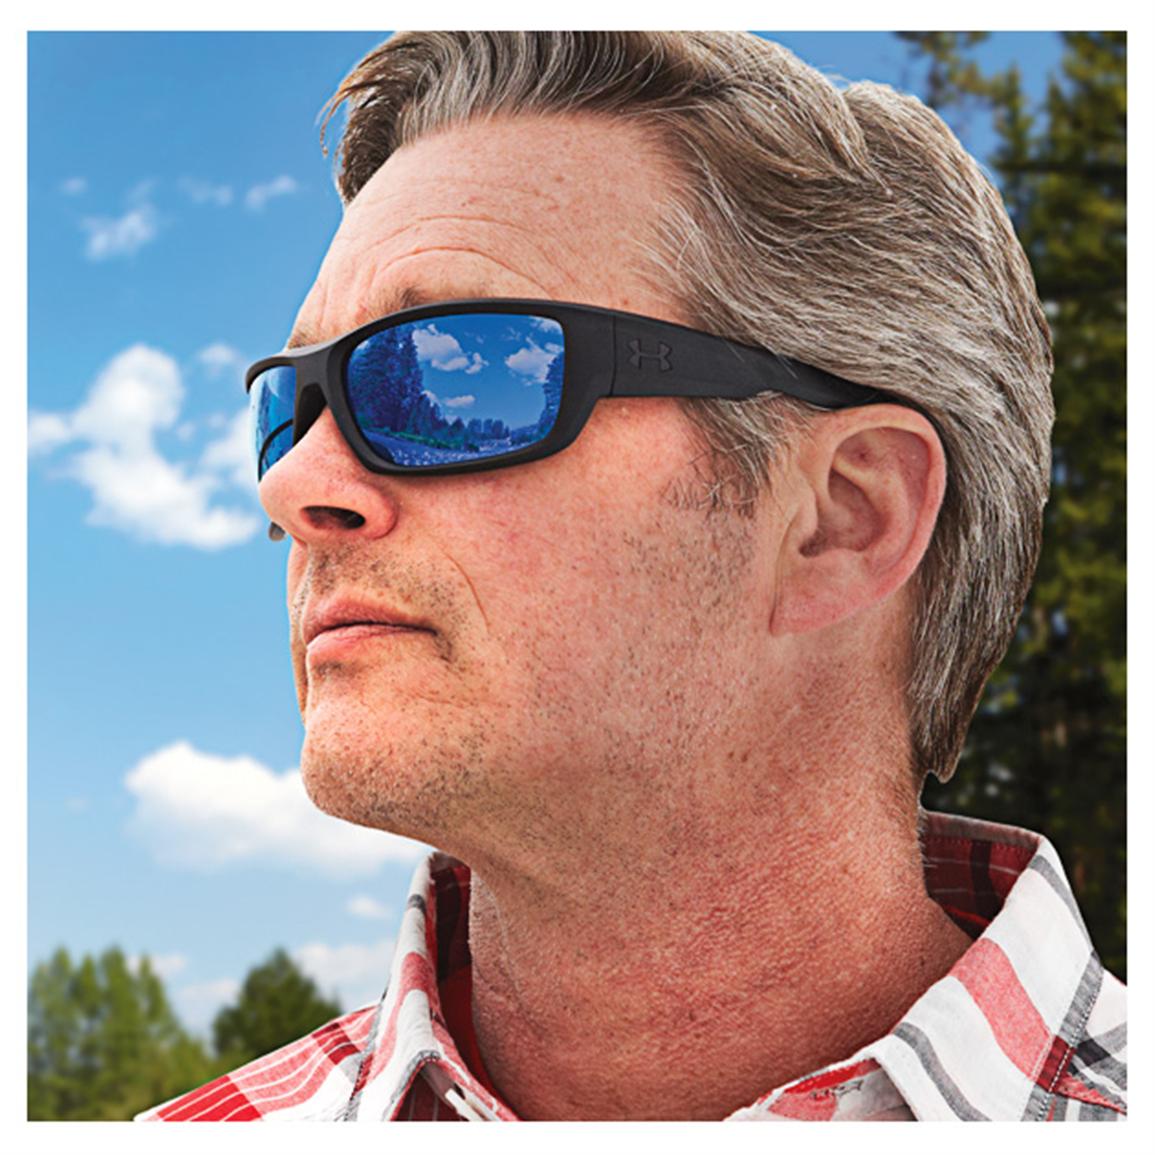 UNDER ARMOUR Power POLARIZED Sunglasses Satin Black/Blue Multi NEW Sport $140